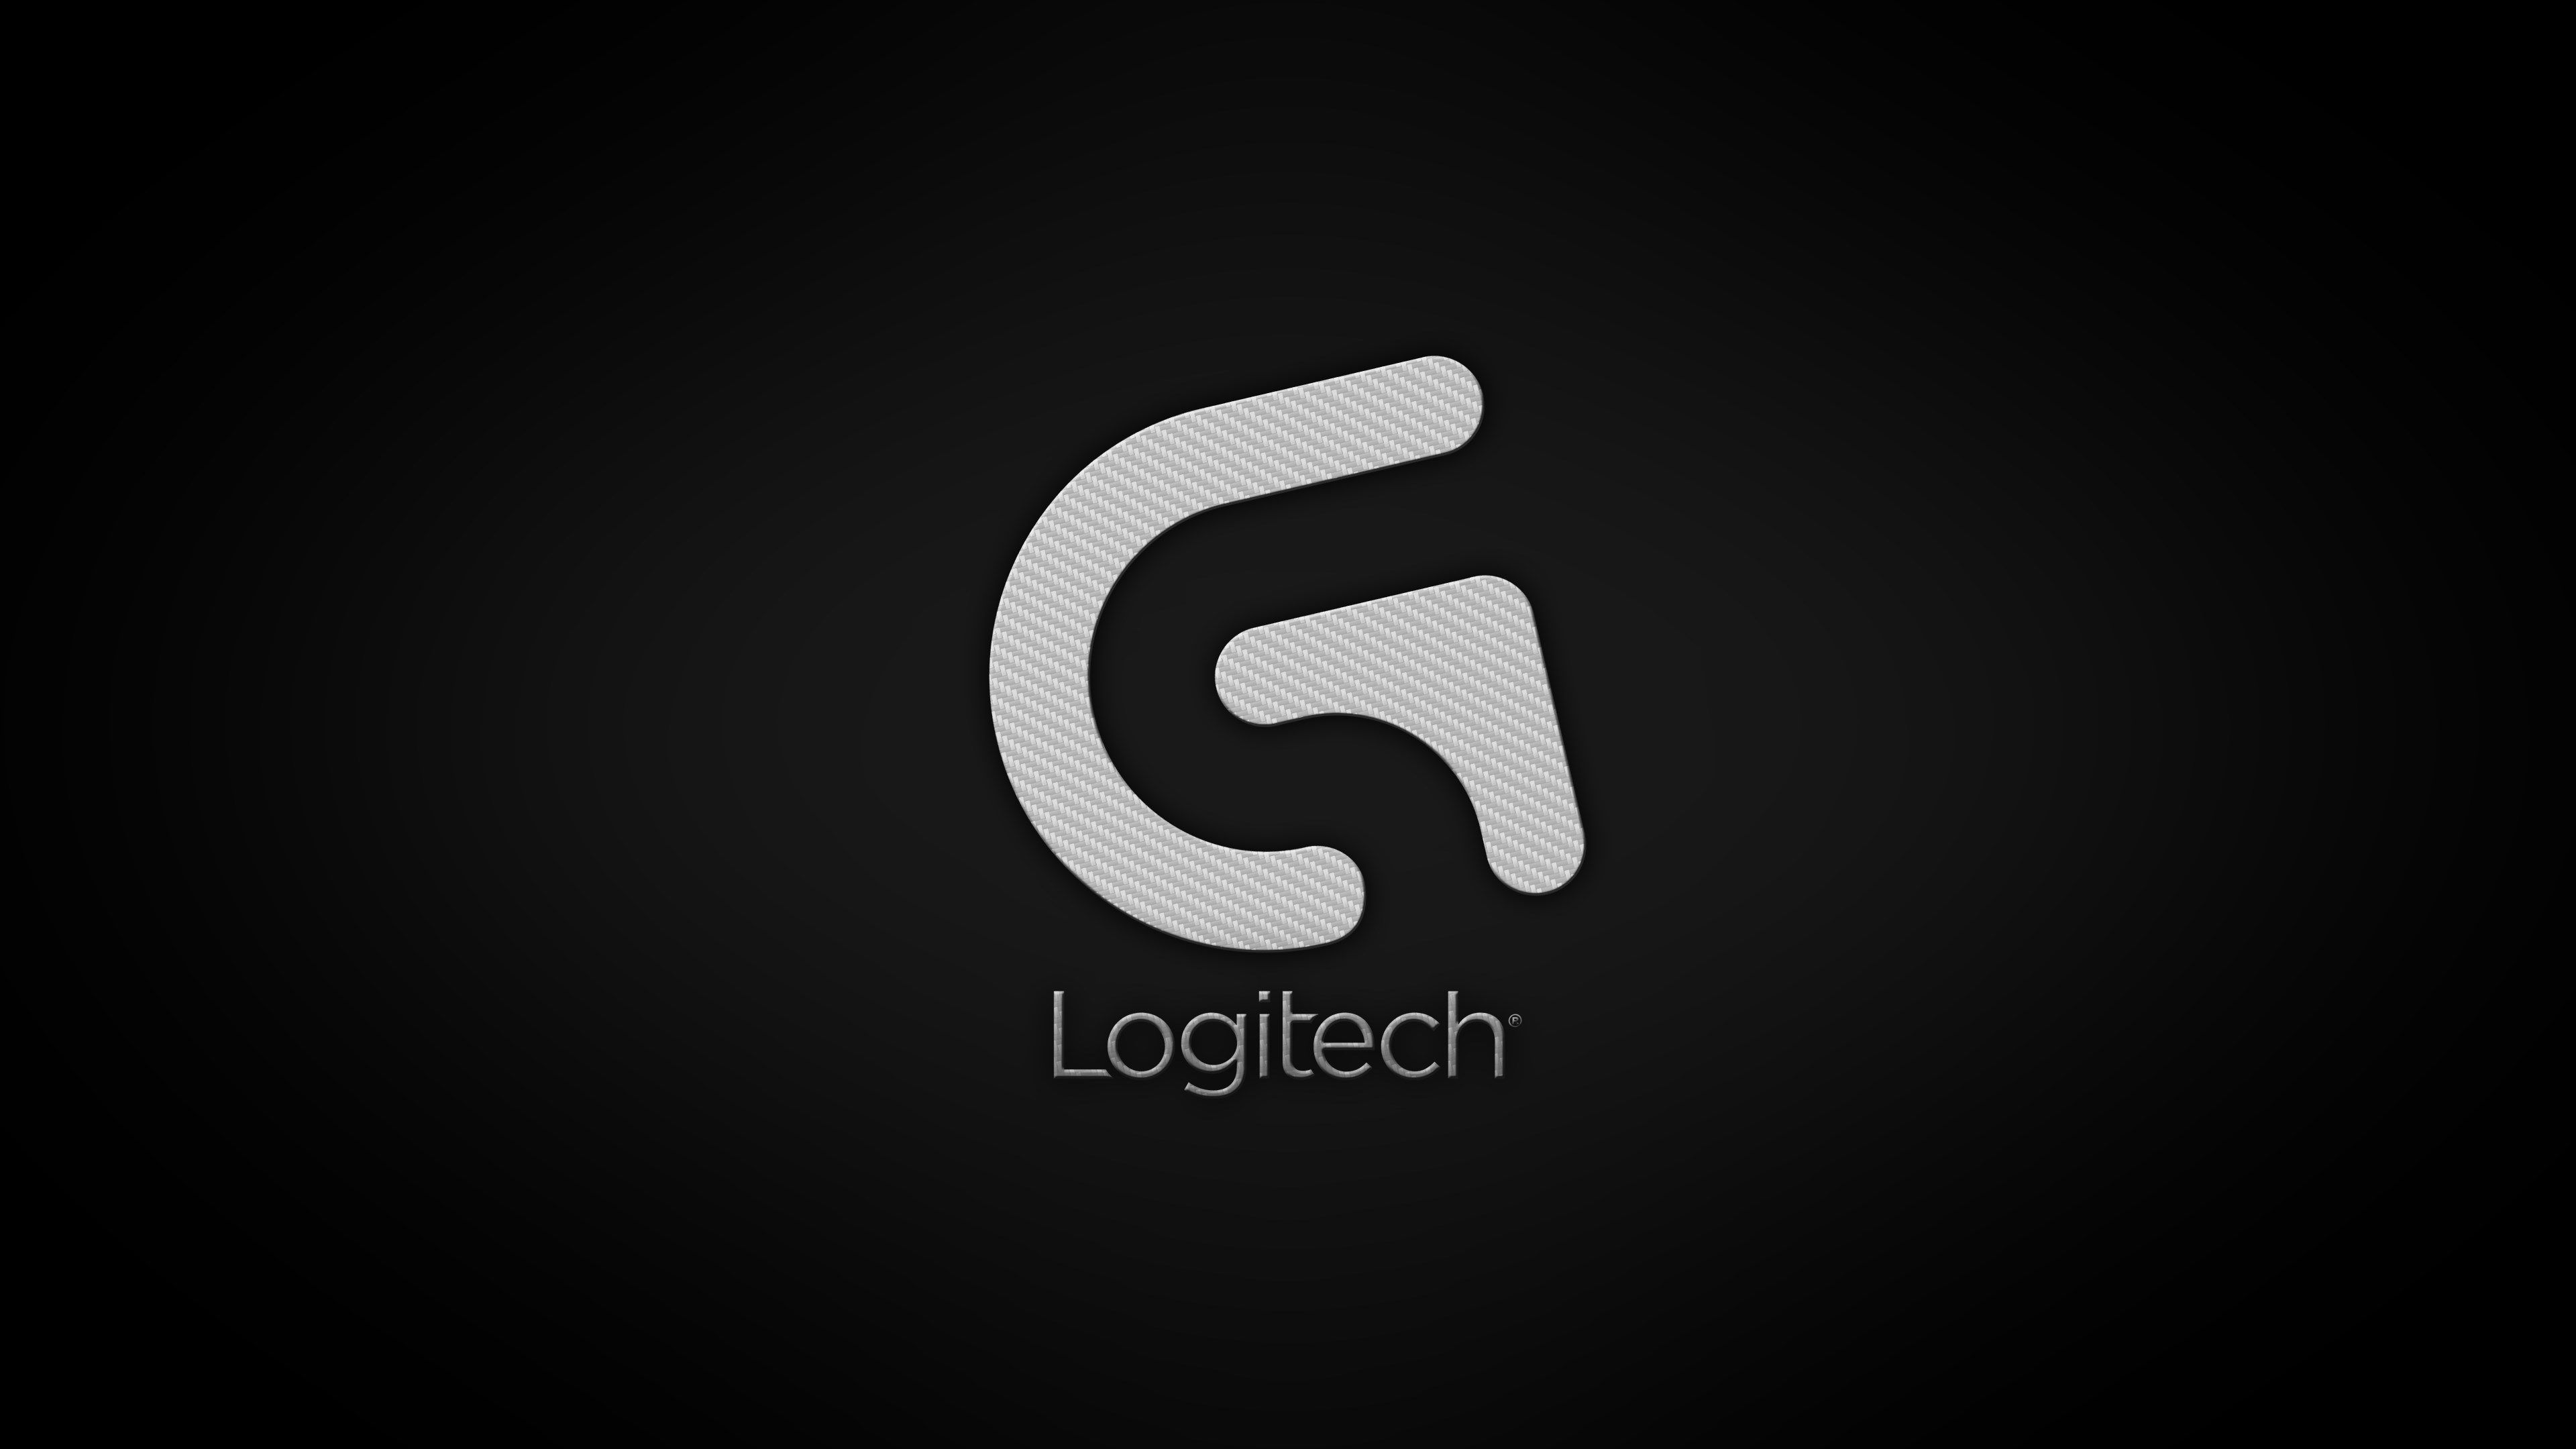 logitech 4k wallpaper photo download free. Logitech